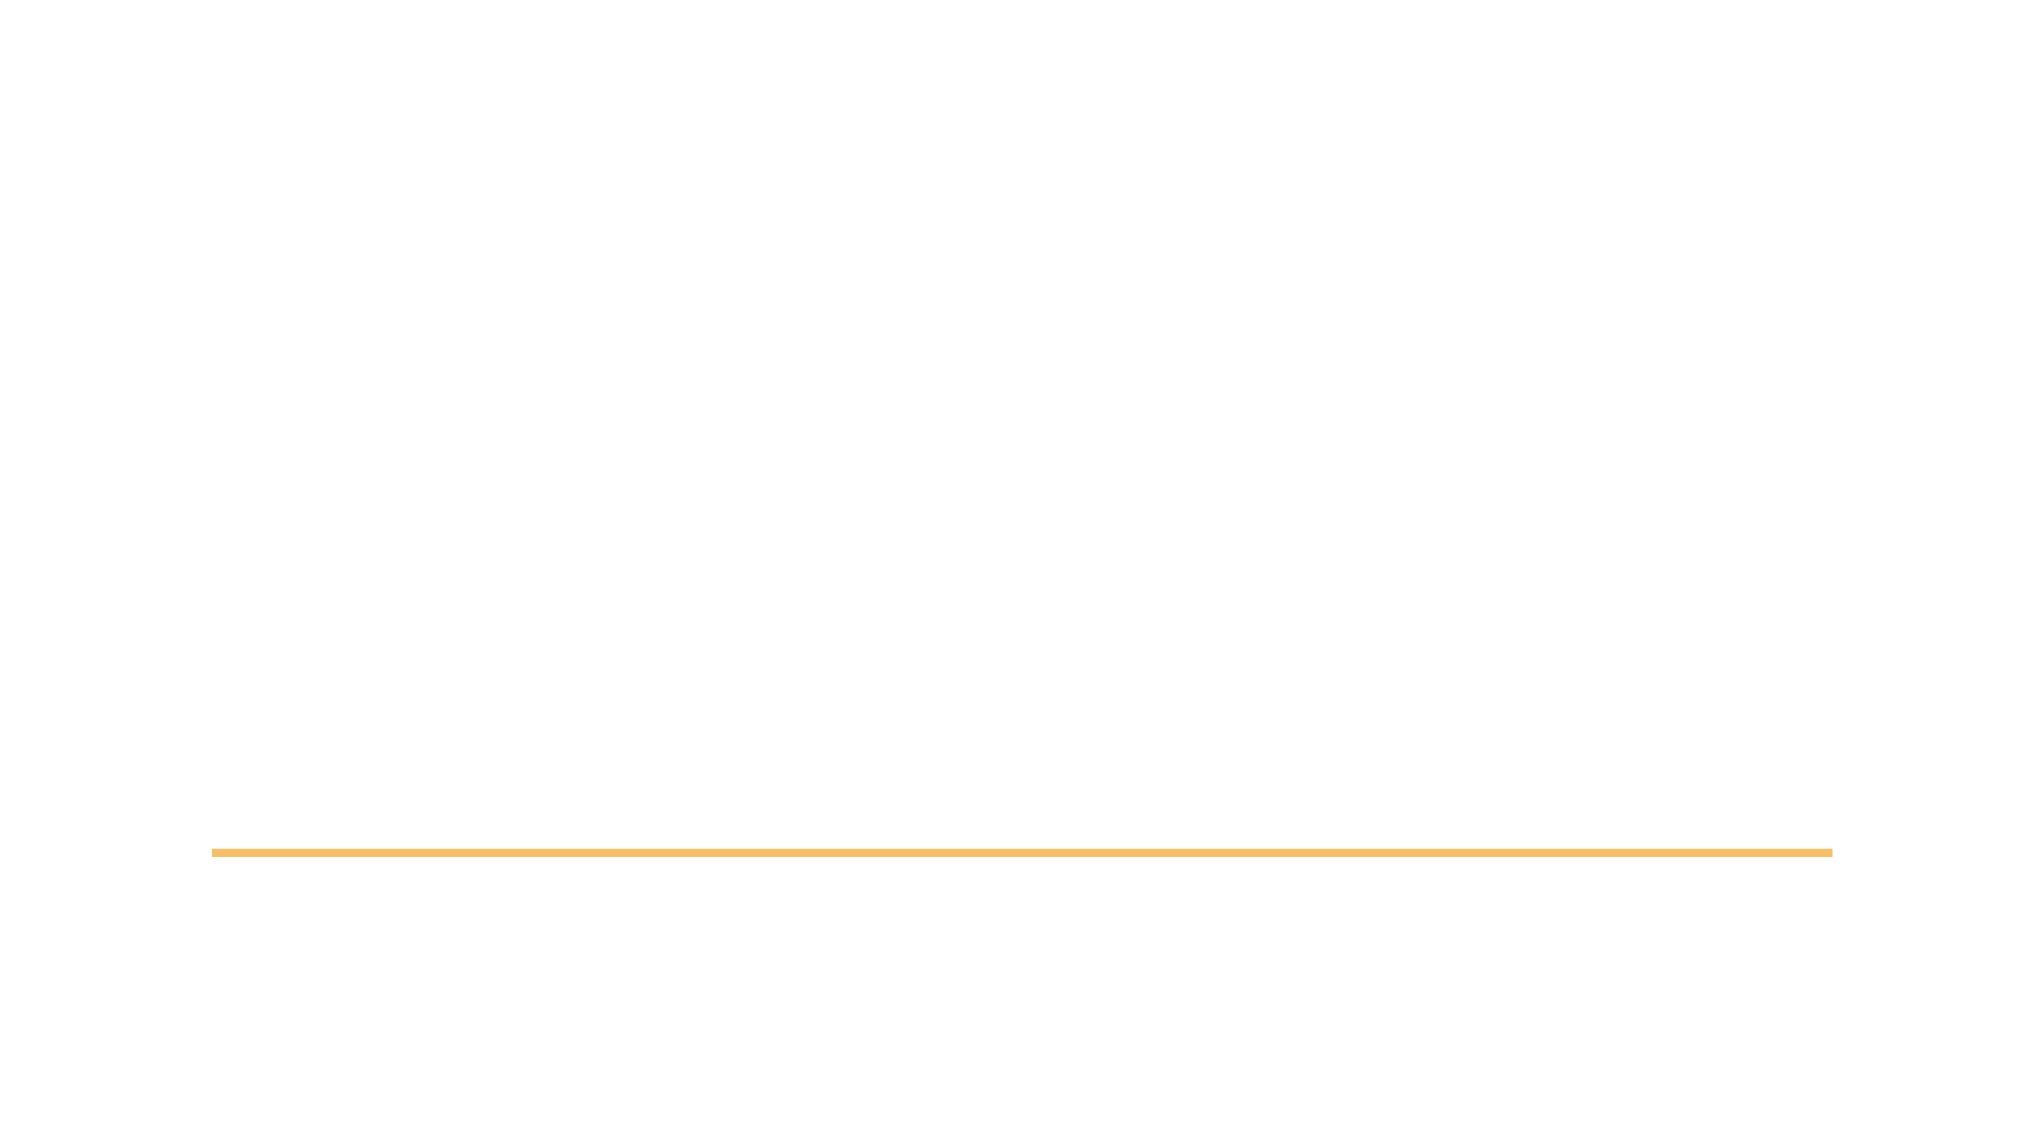 the residence at willow falls cedar falls apartments